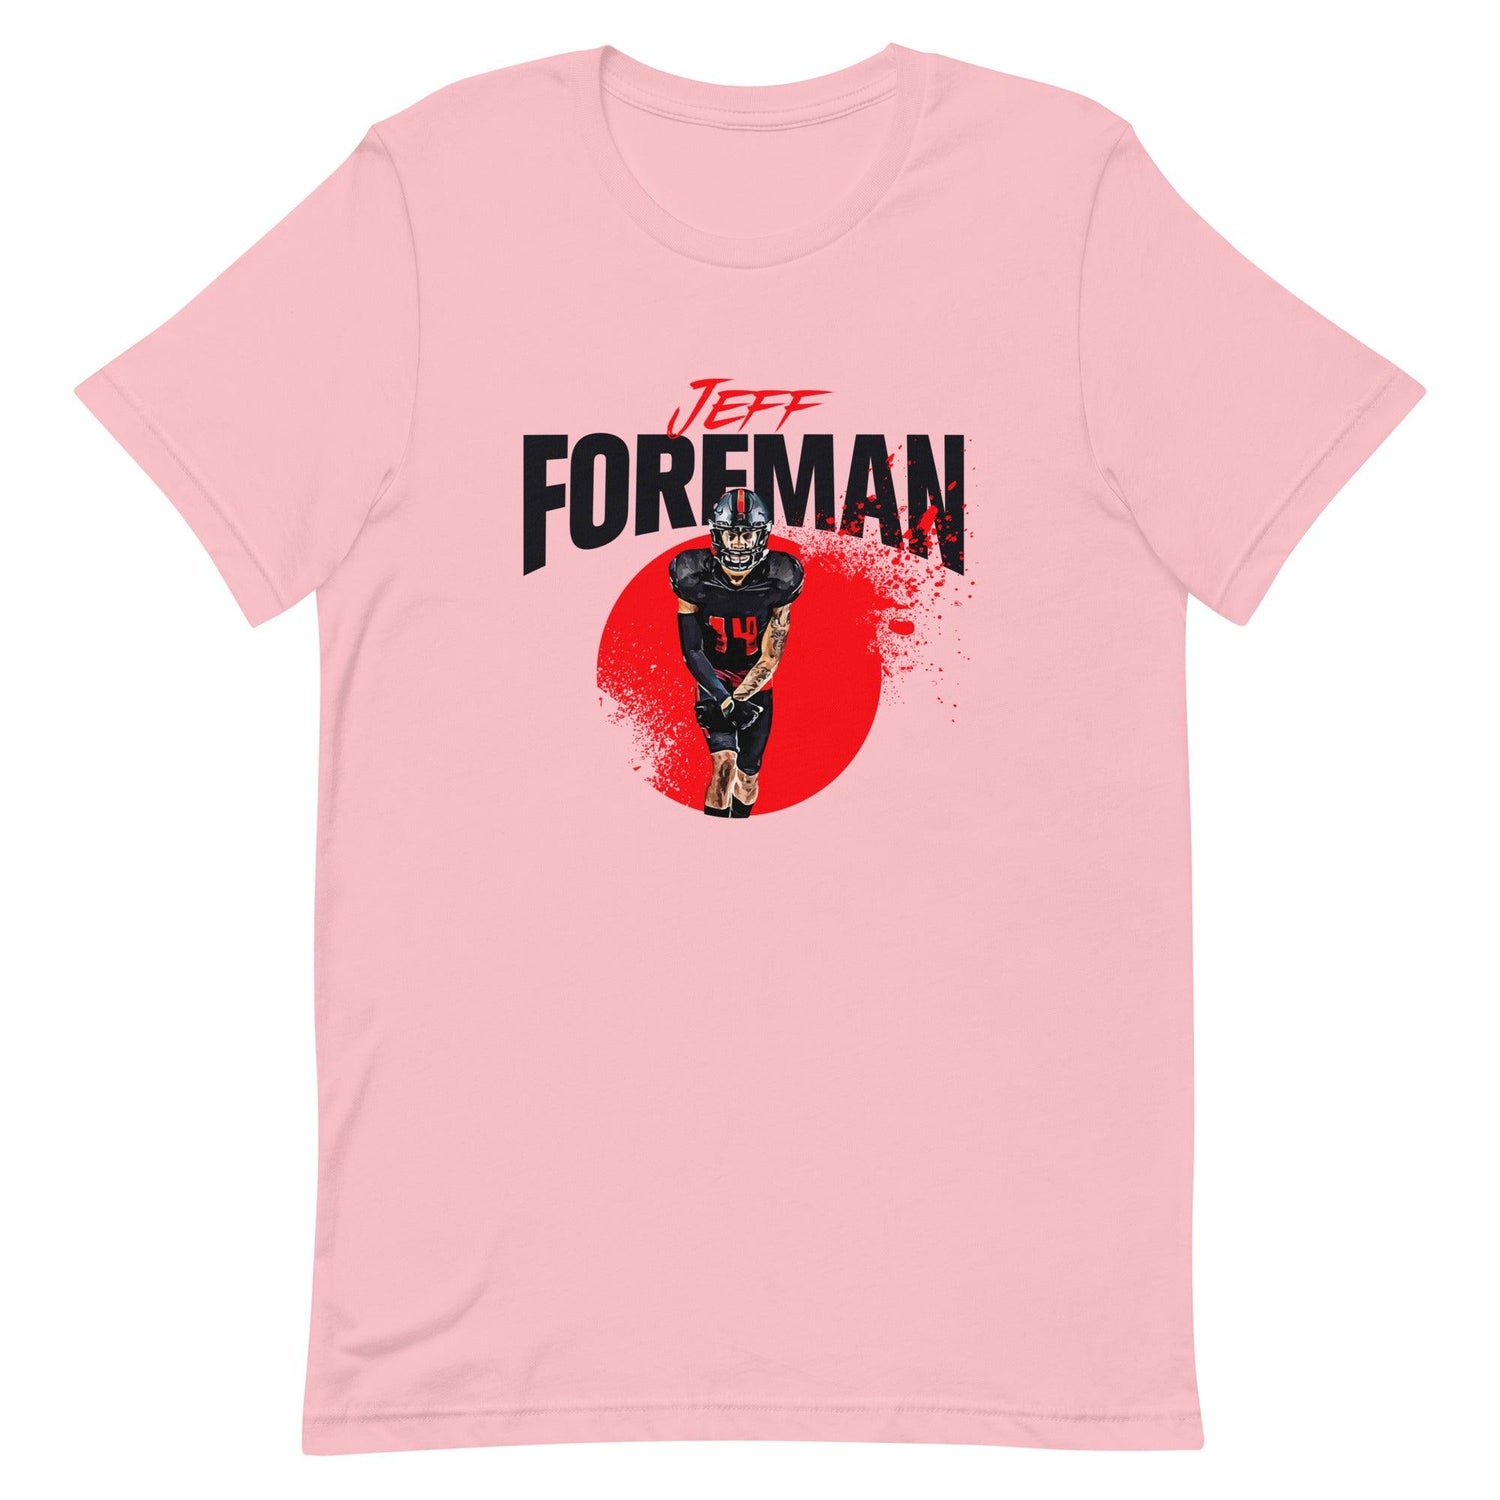 Jeff Foreman "Splash" t-shirt - Fan Arch